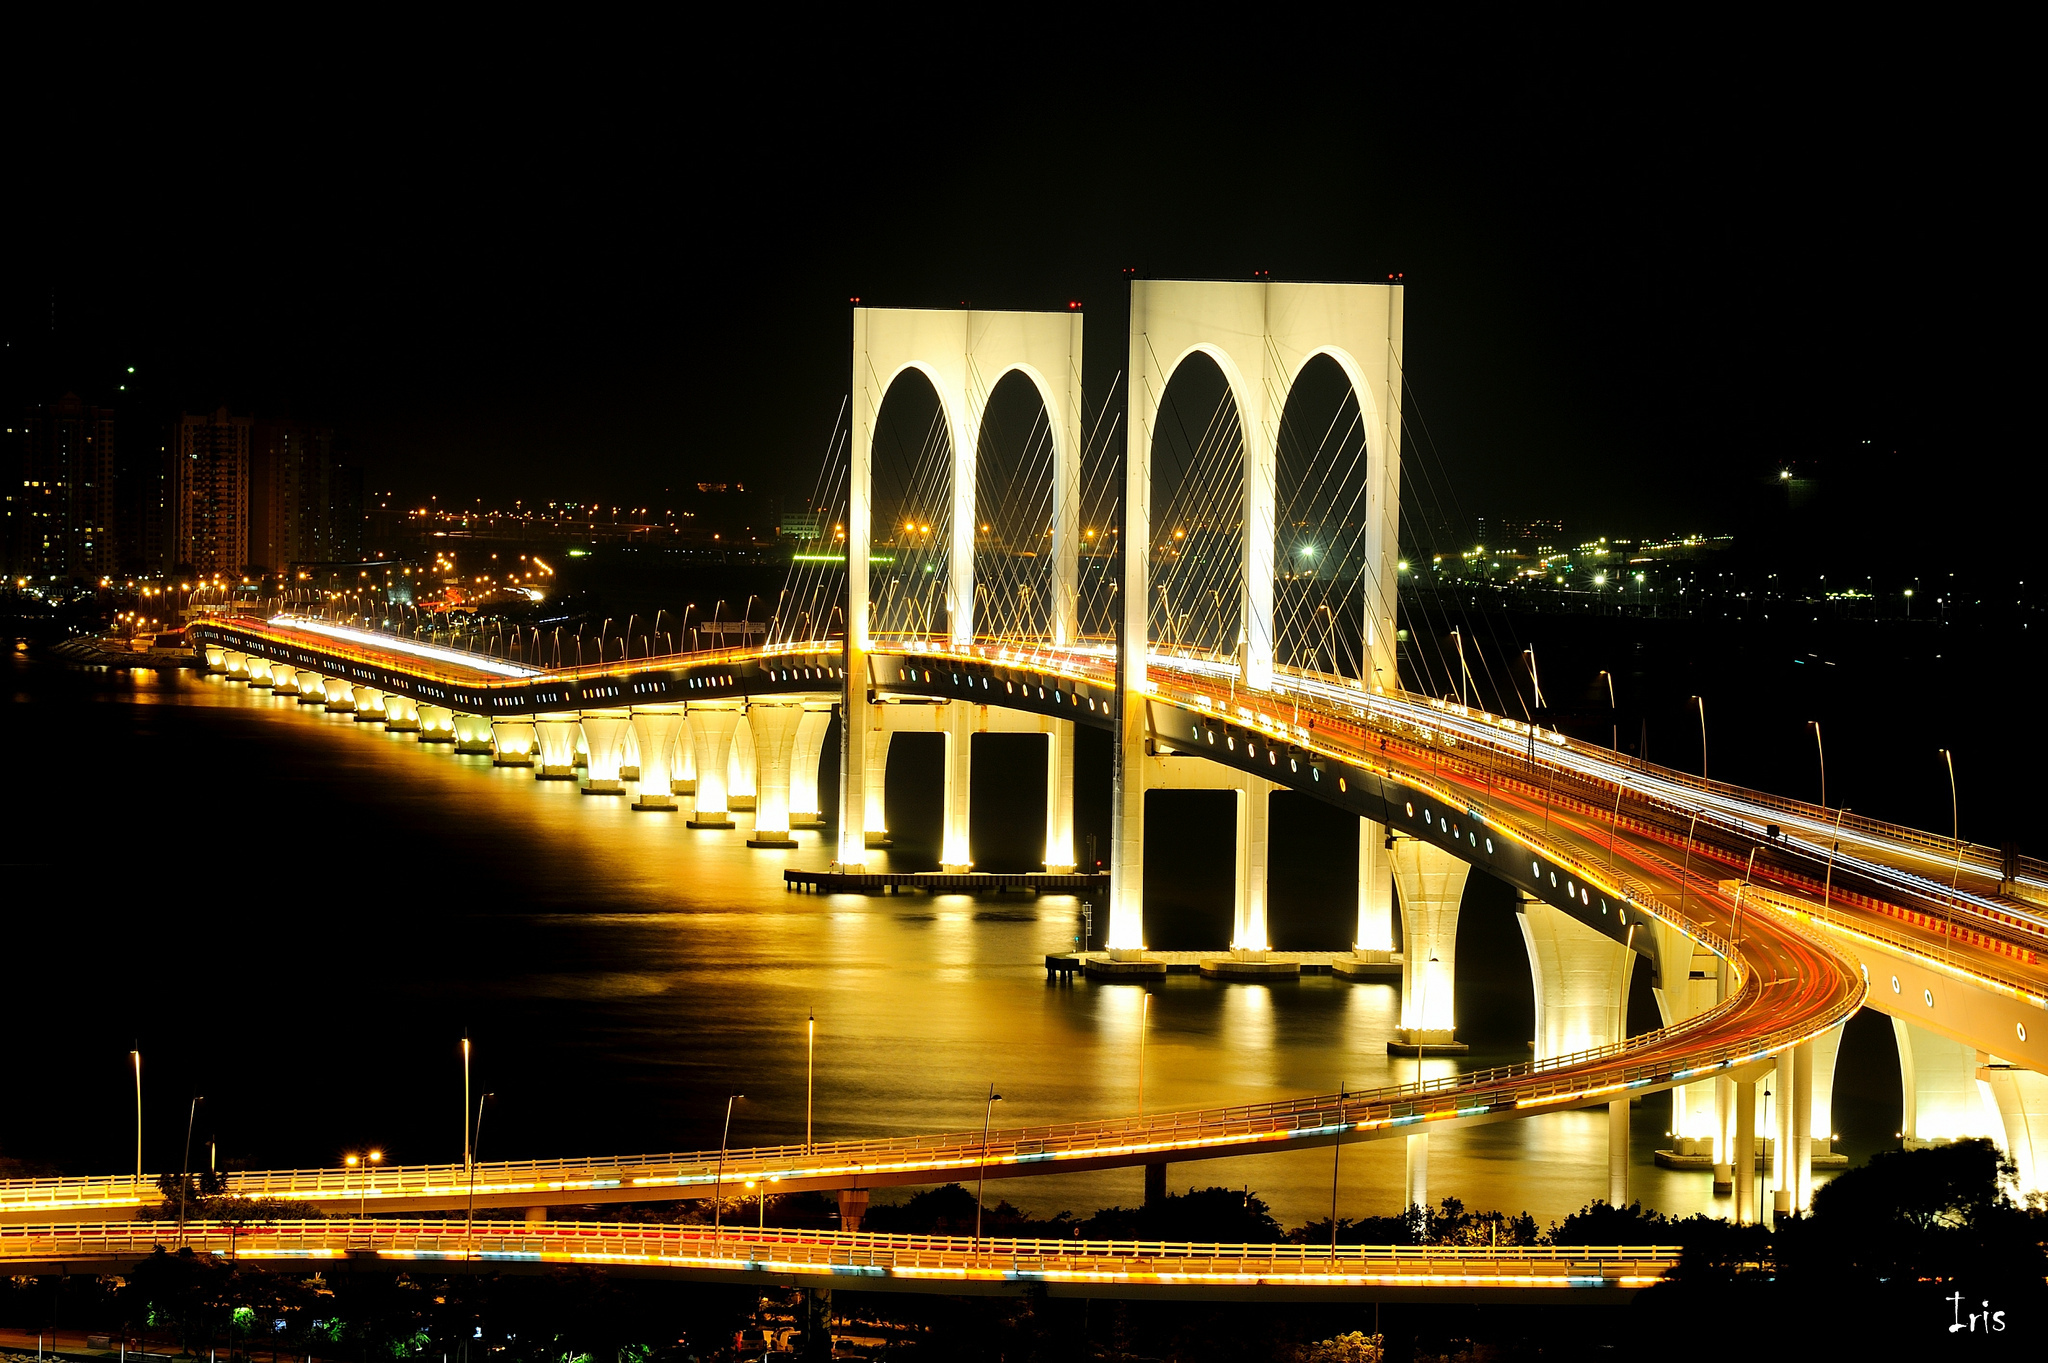 The Hong Kong Zhuhai Macau Bridge HD Wallpaper Background Image